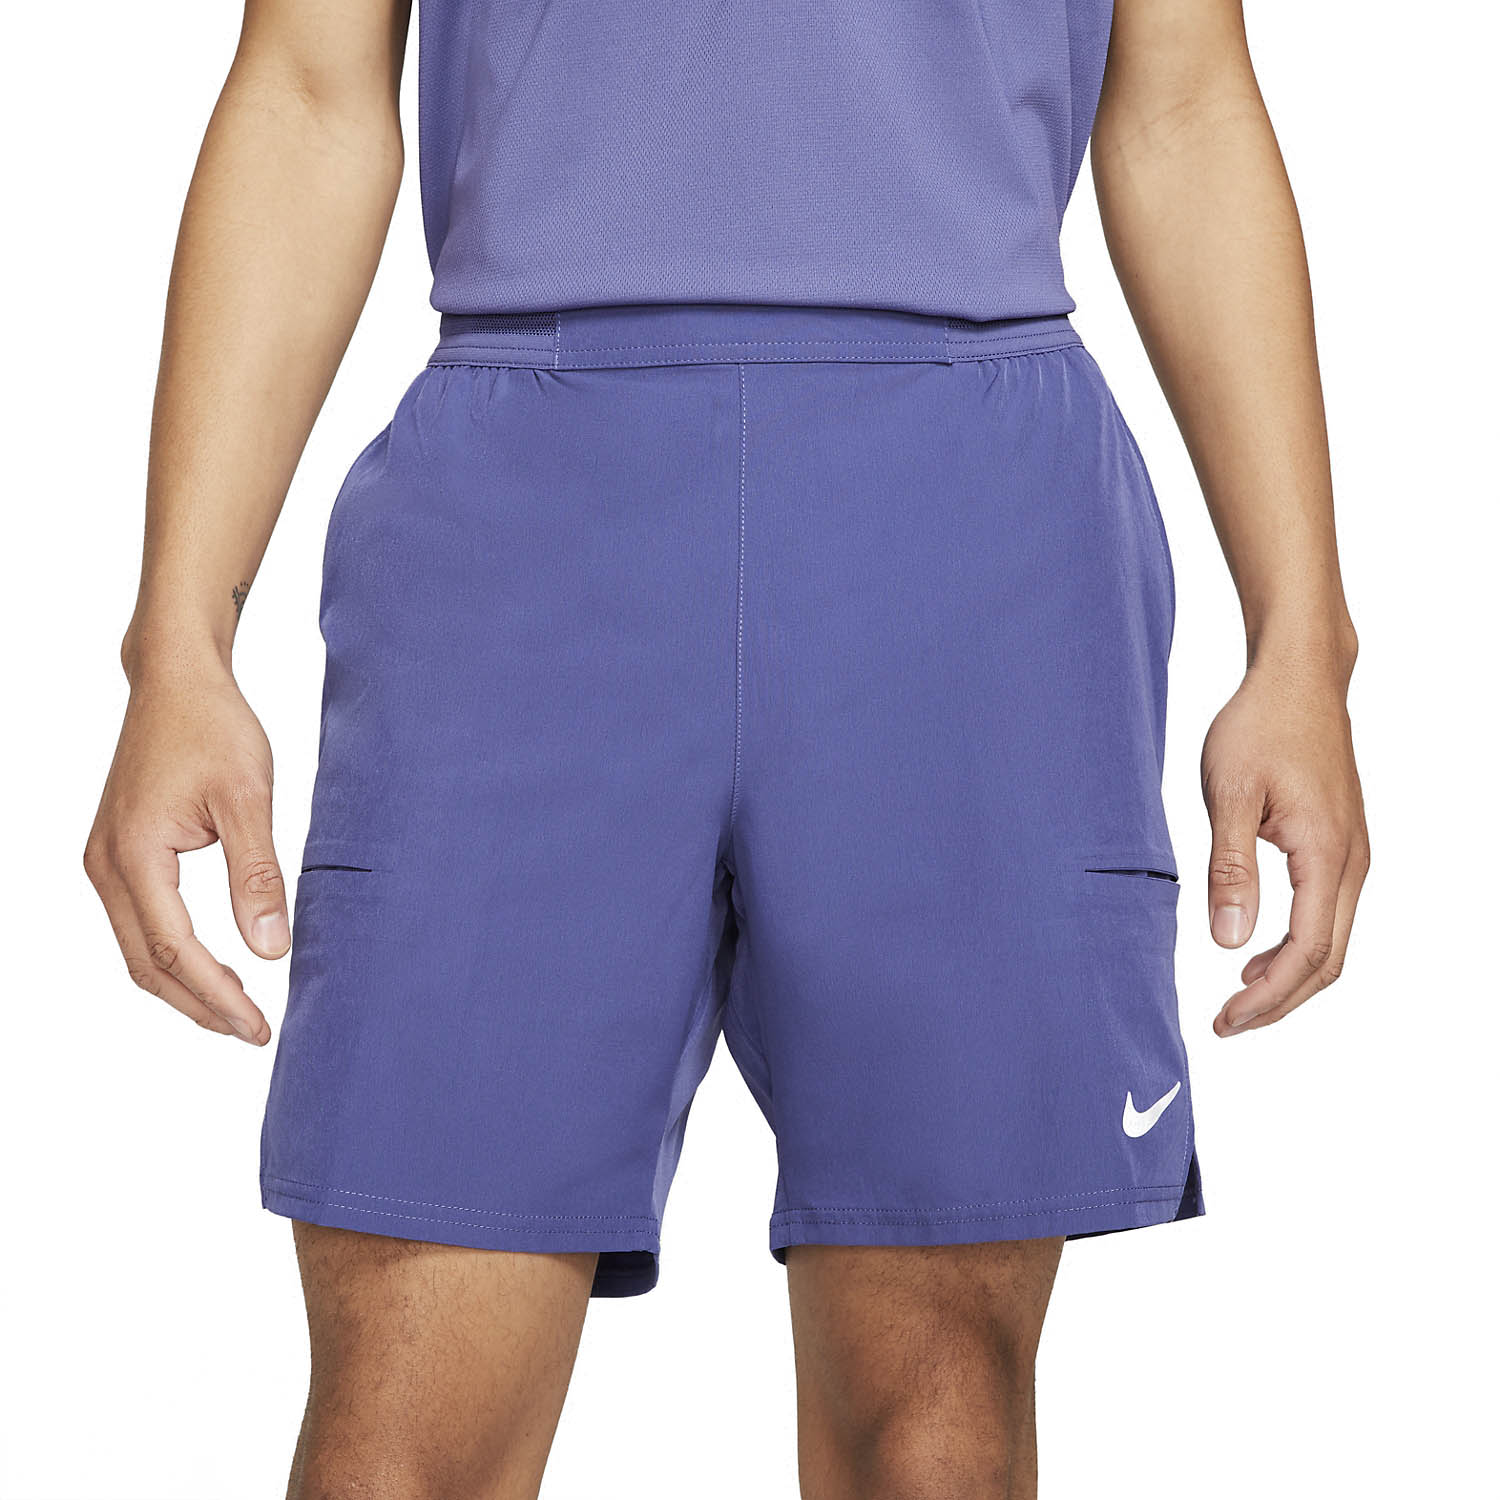 Buy > light purple nike shorts > in stock